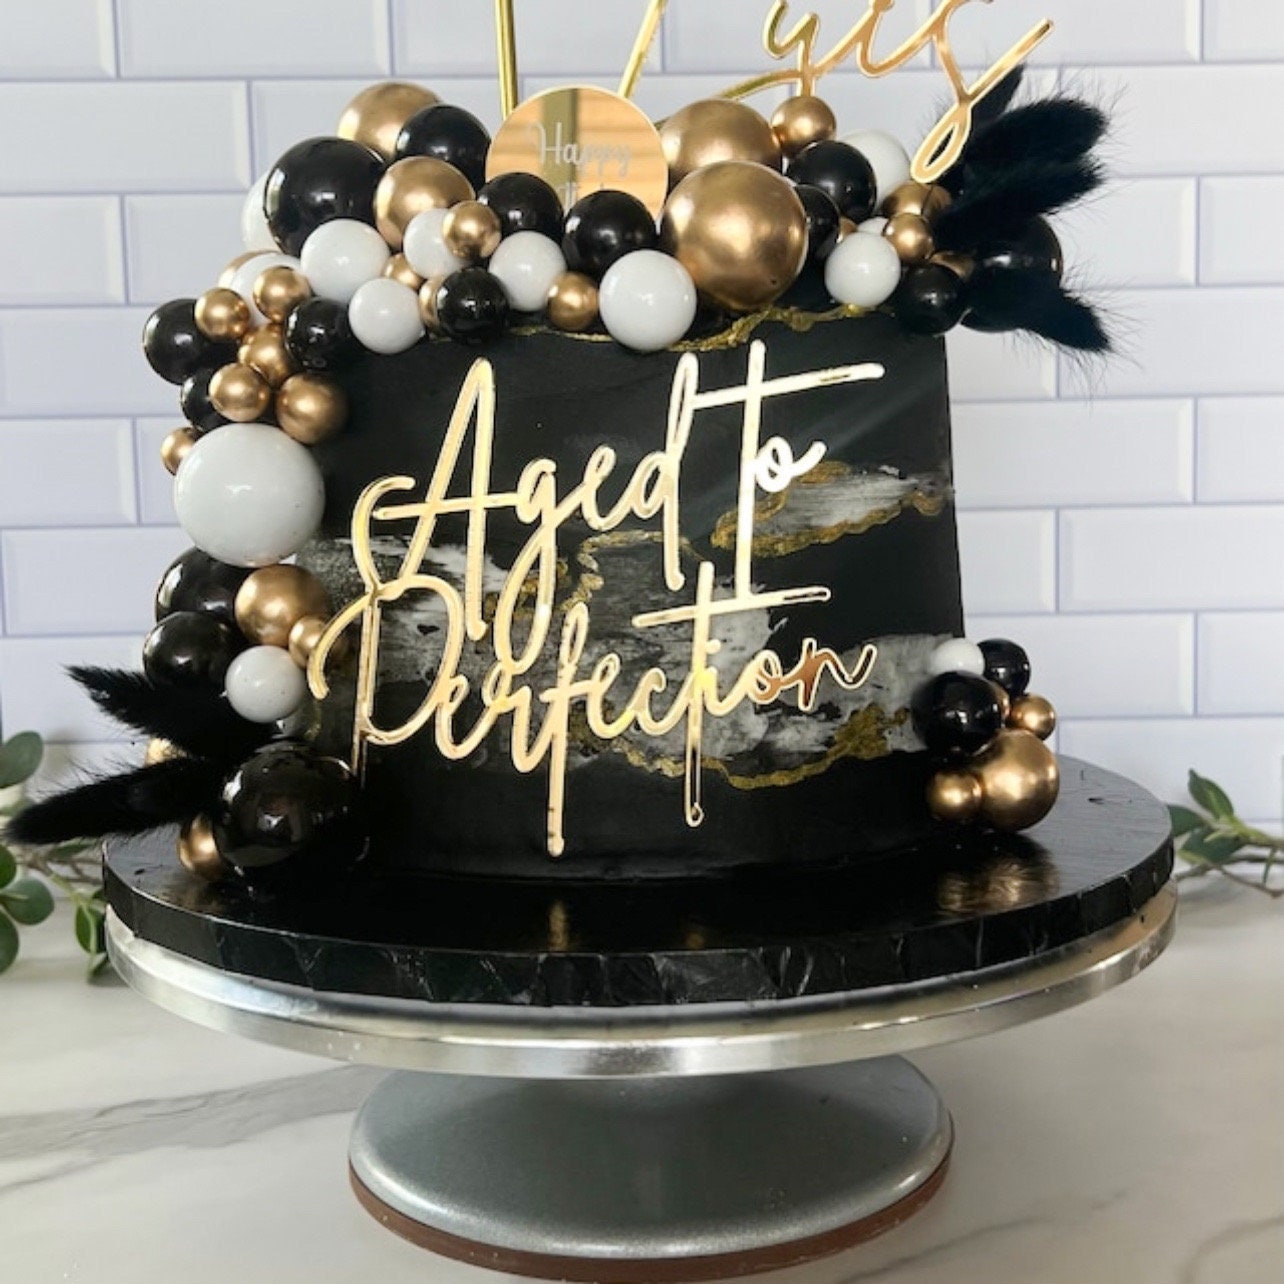 Jack Daniels Label Edible Cake Topper Decoration – Cake Stuff to Go